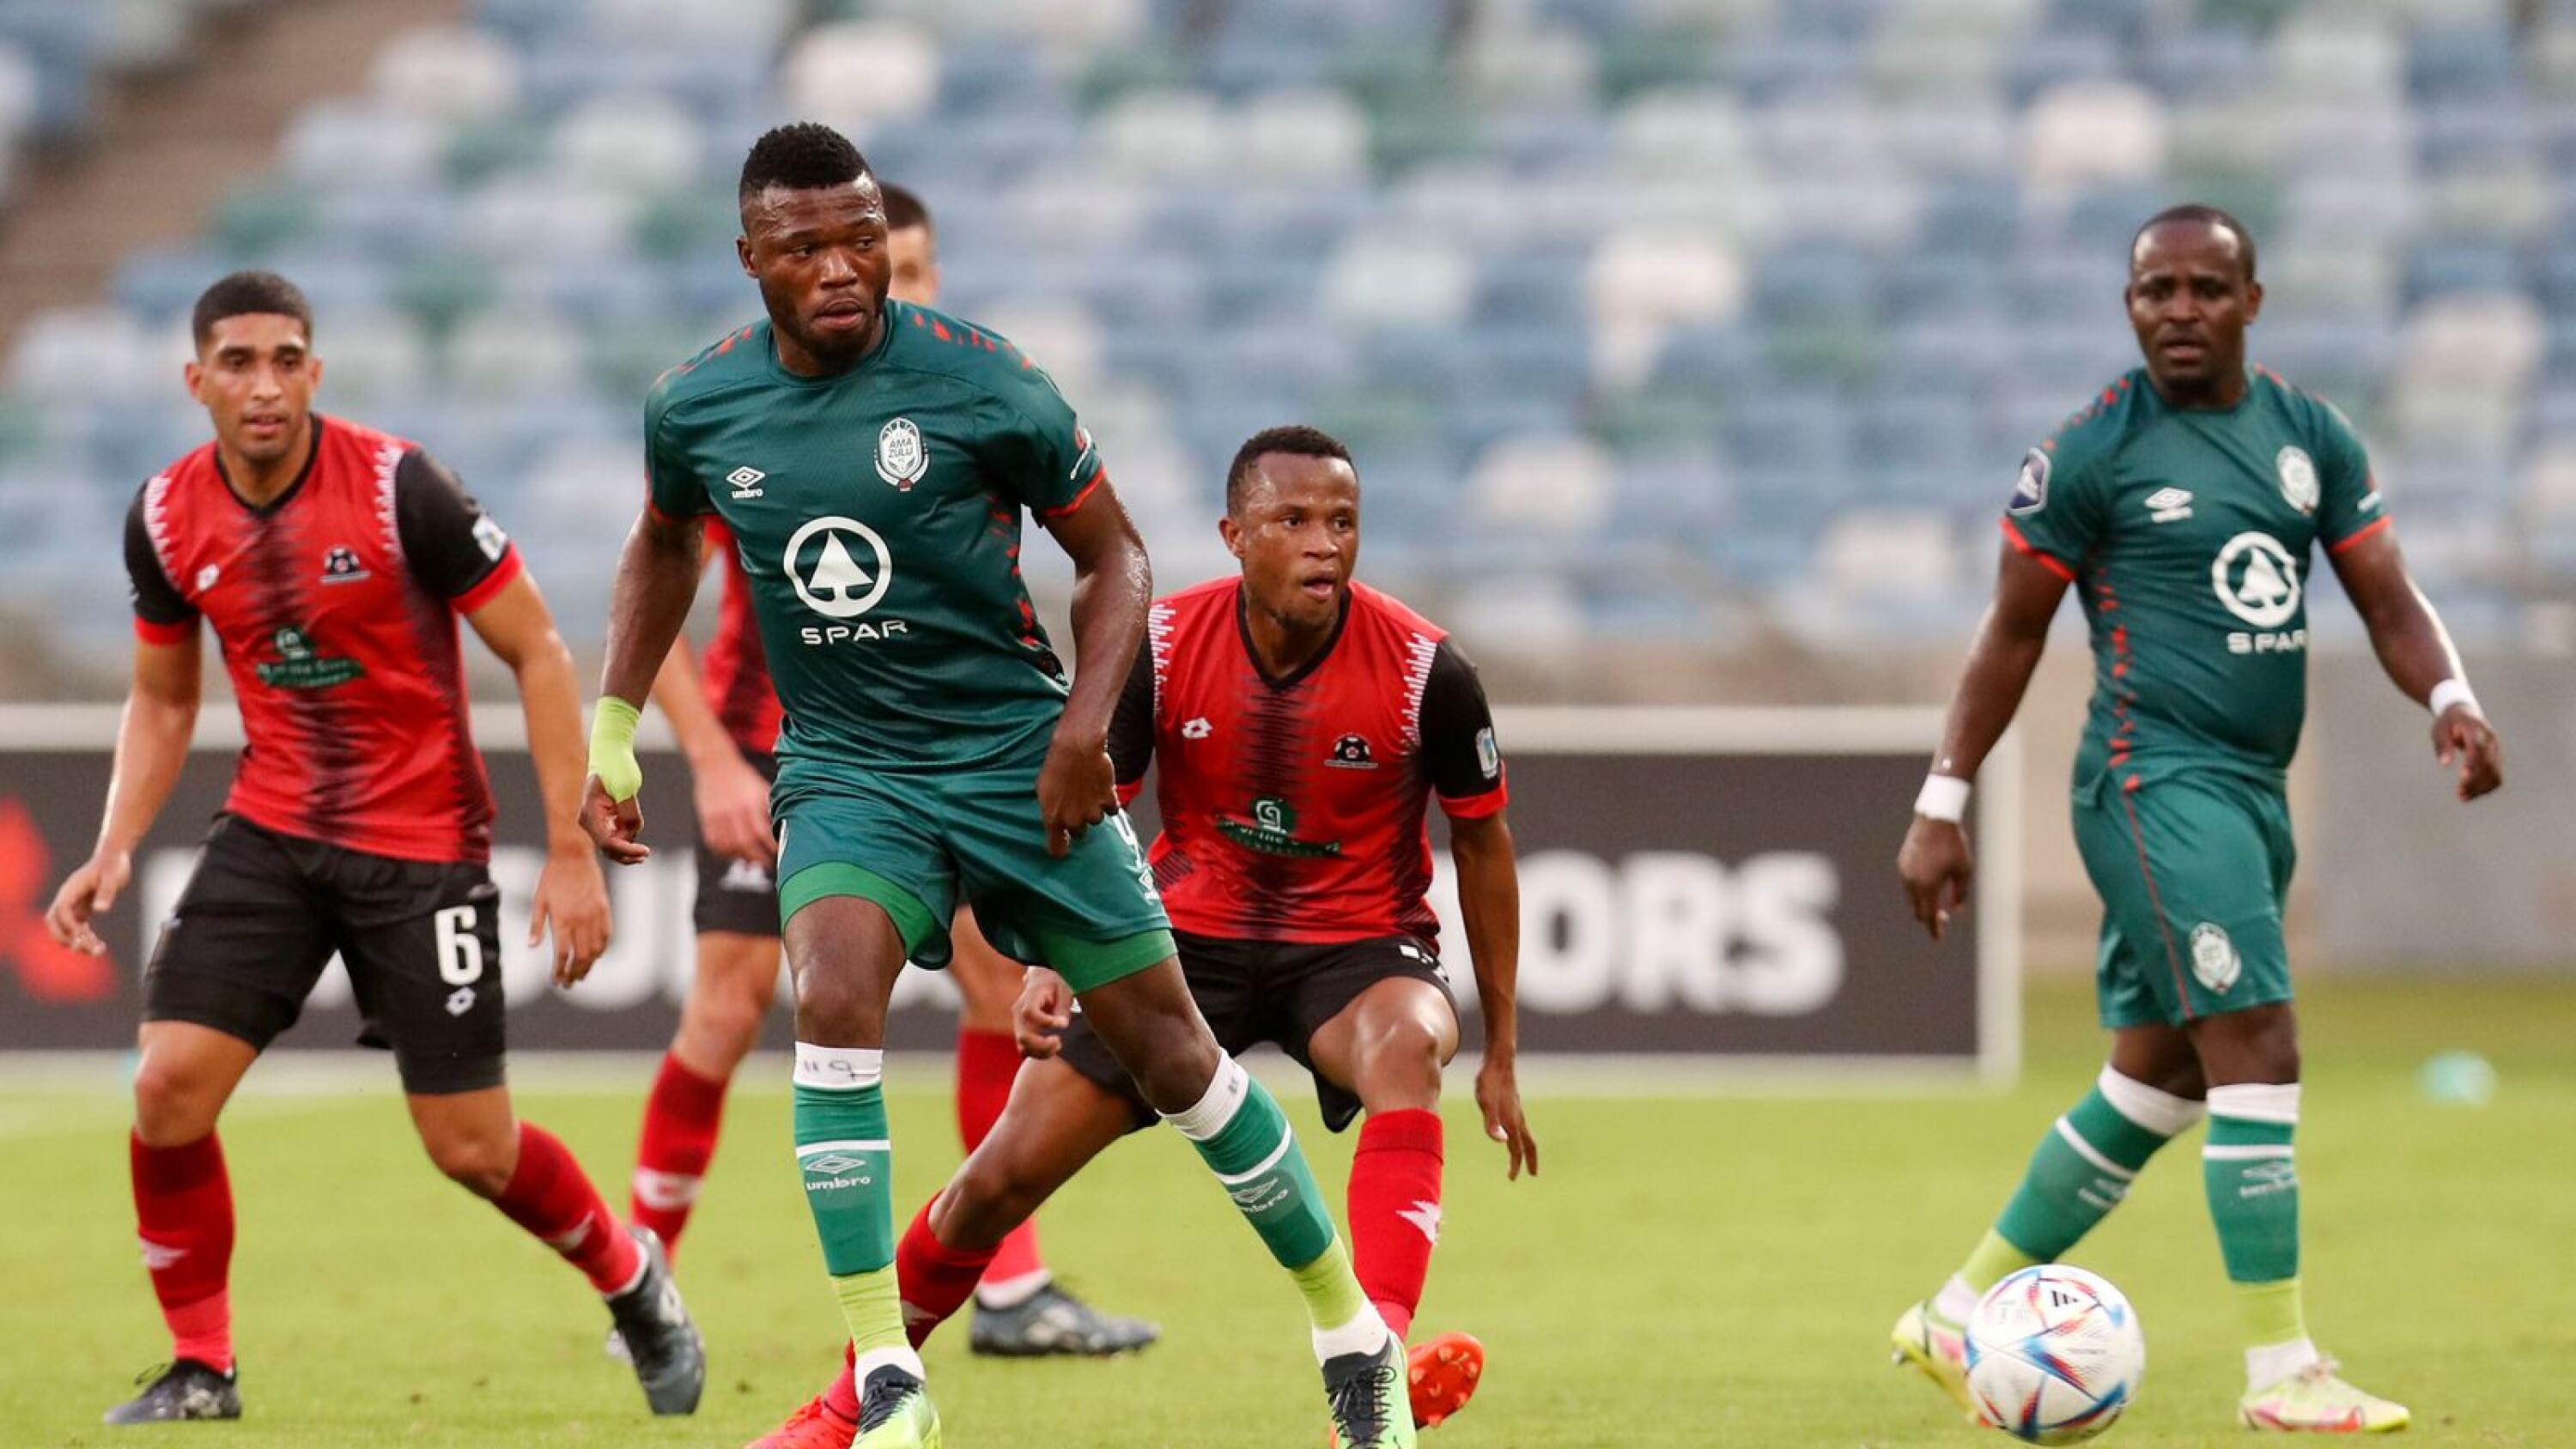 Augustine Kwem of AmaZulu is challenged by Bongani Sam of Maritzburg United during their DStv Premiership clash at the Moses Mabhida Stadium in Durban on Wednesday